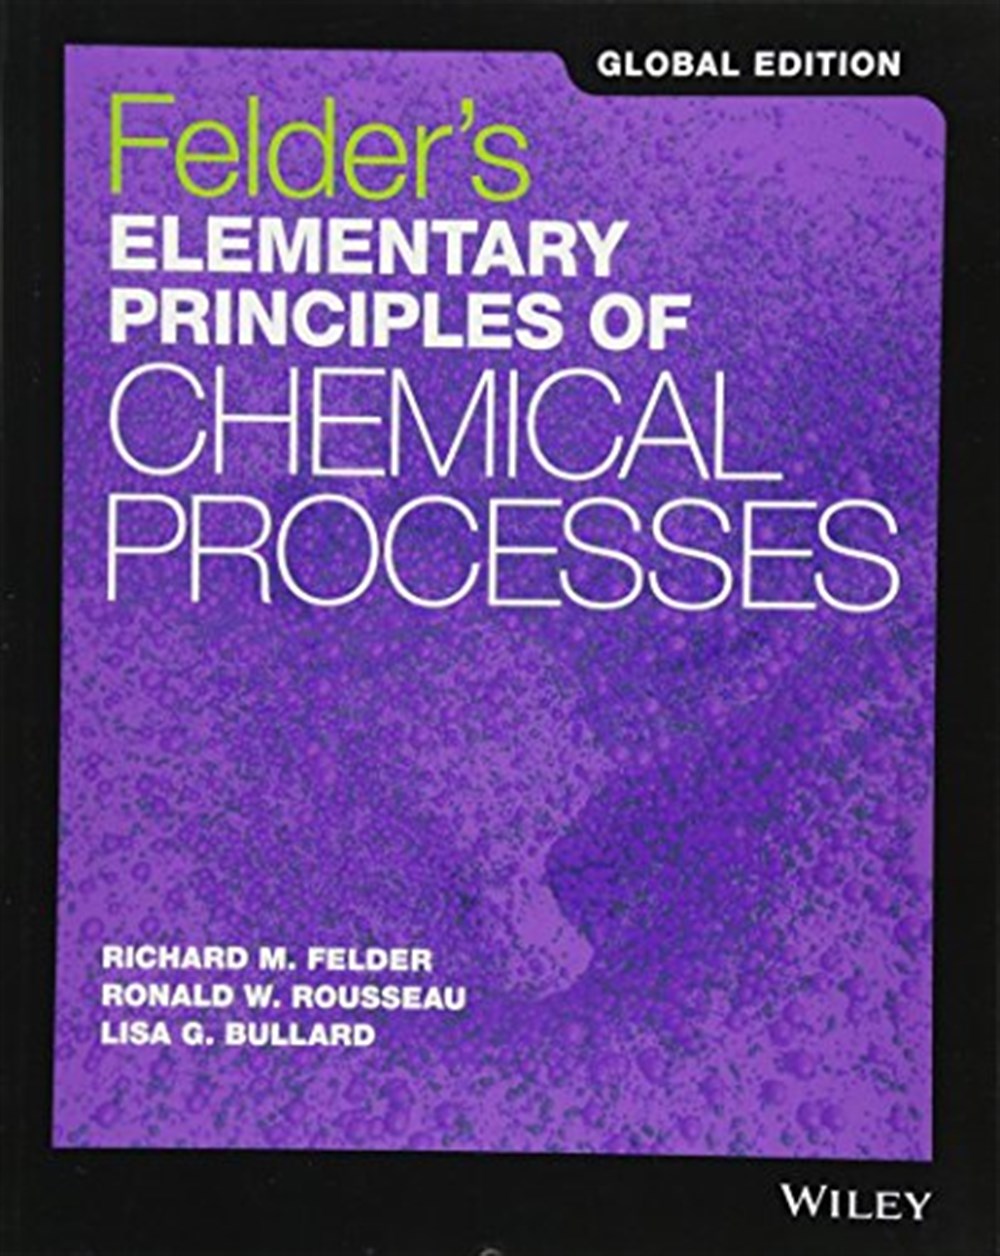 (KOD) Felders Elementary Principles of Chemical Processes, 4th Edition, Global Edition (Kod içinde e-kitap erişimi de mevcuttur.)